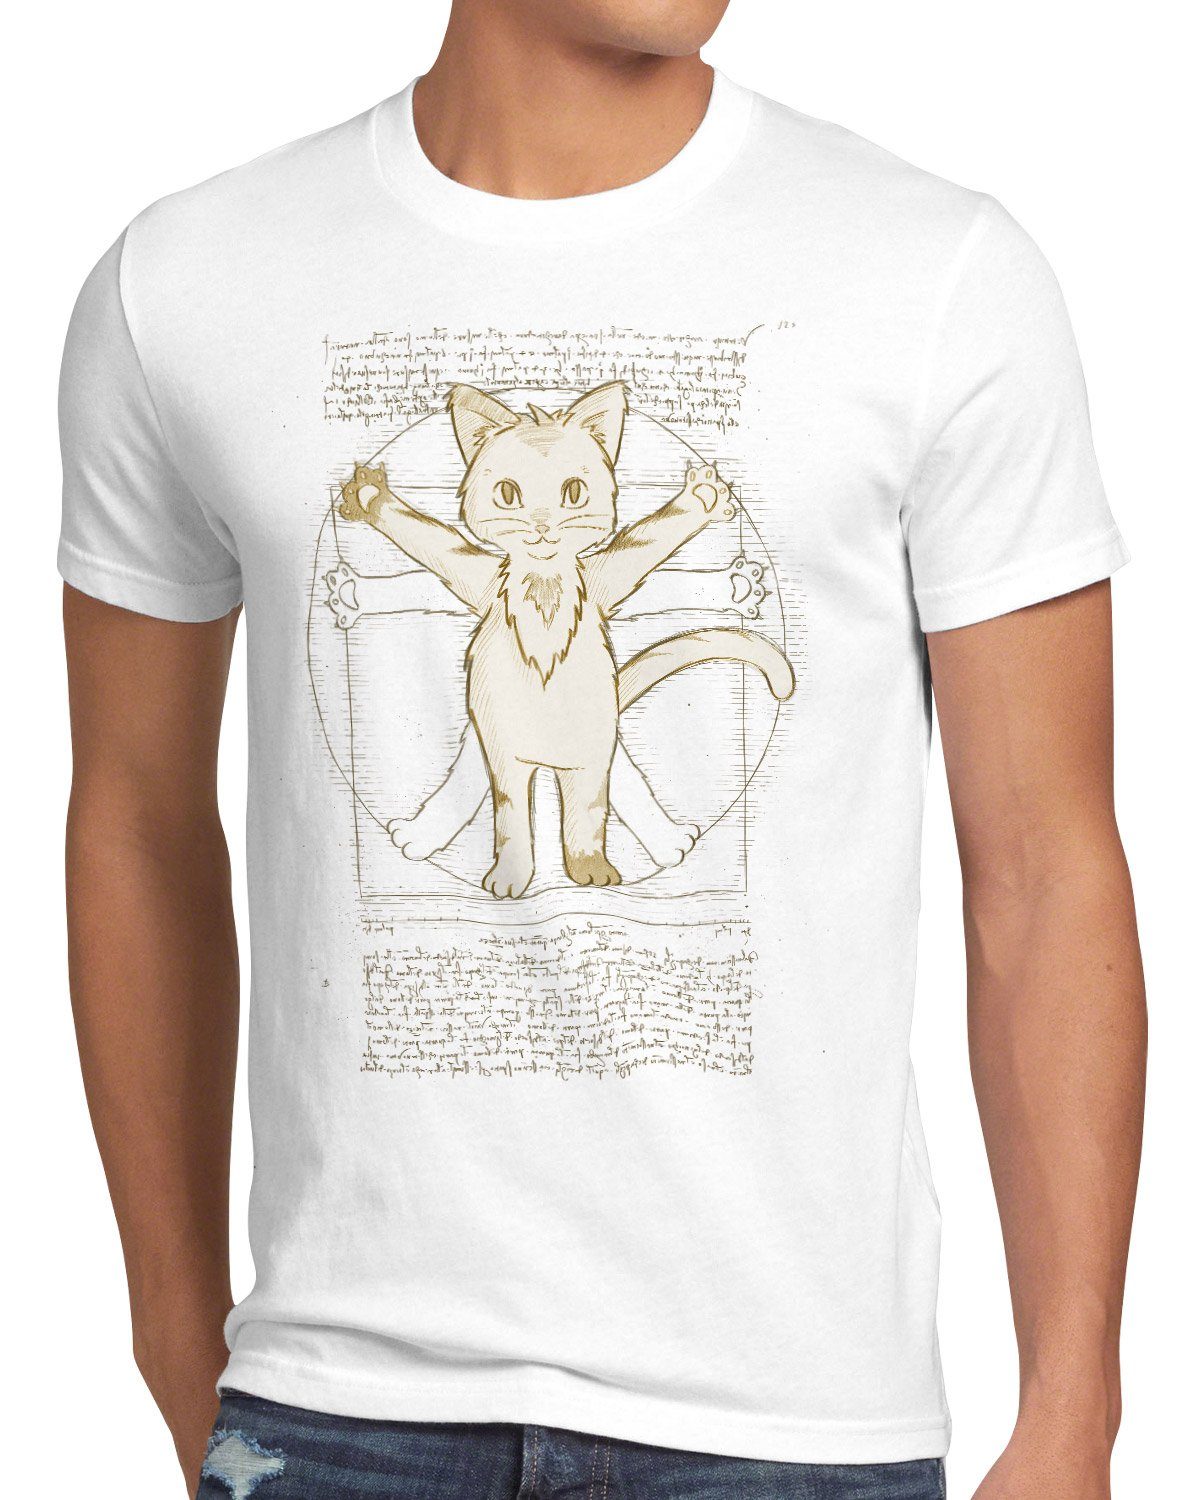 Vitruvianische T-Shirt vinci Herren da Print-Shirt kätzchen weiß Katze style3 tier